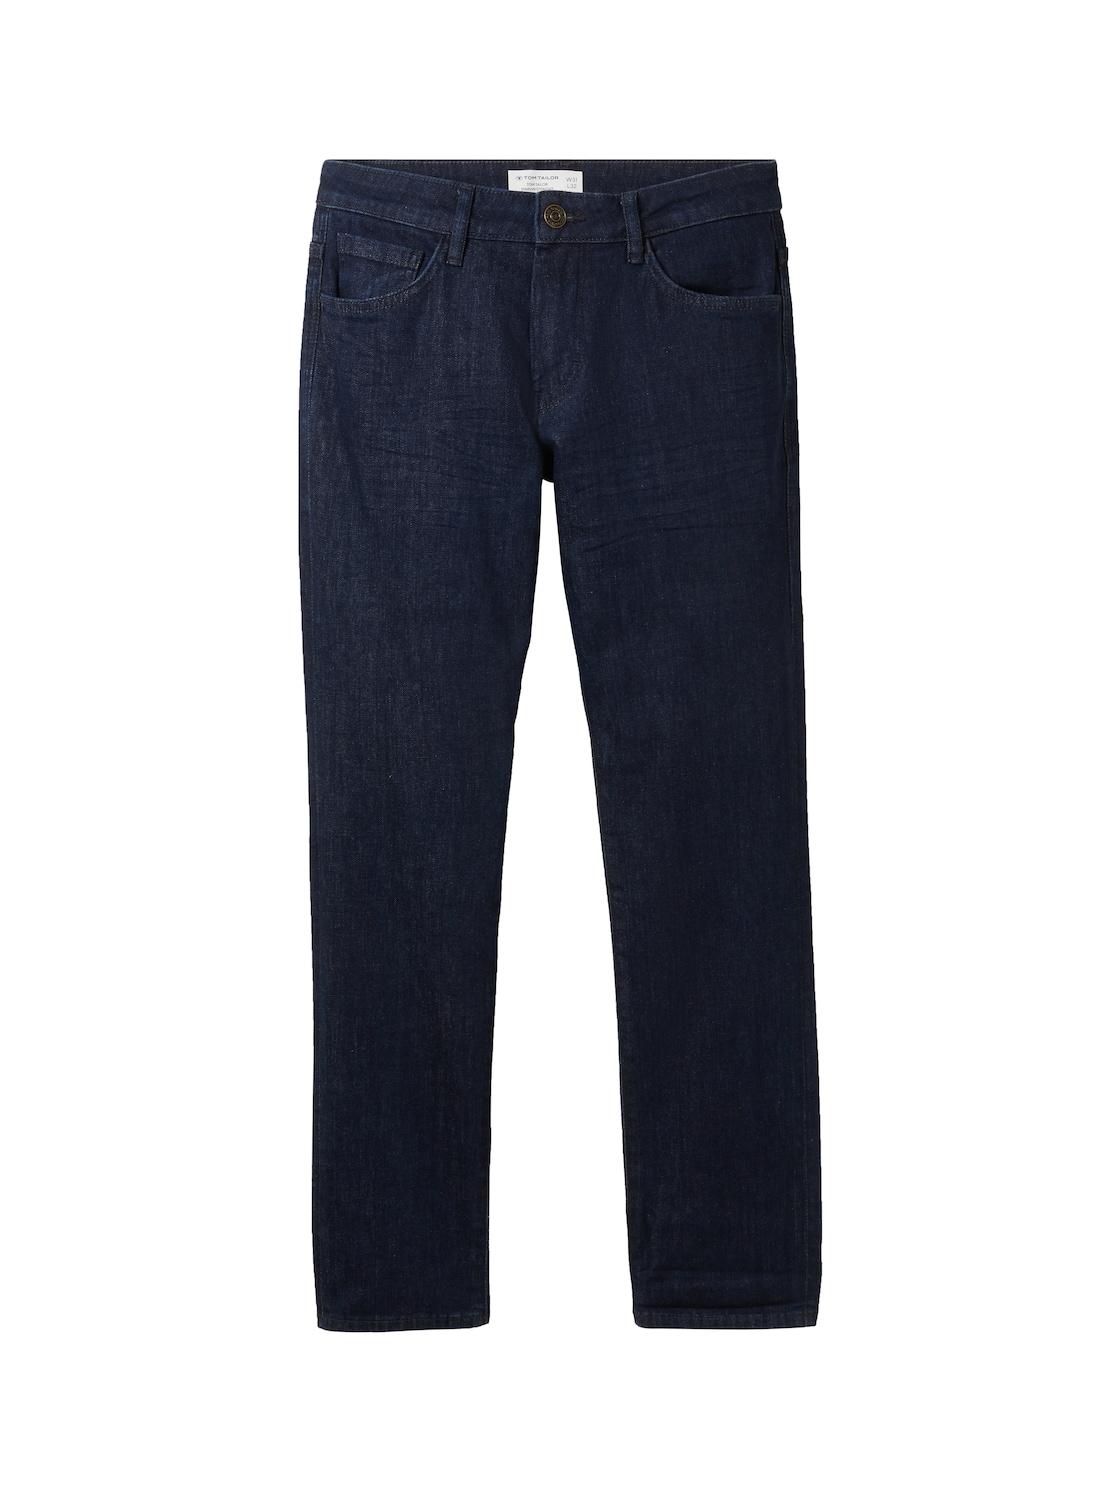 TOM TAILOR Herren Marvin Straight Jeans, blau, Uni, Gr. 33/34 von Tom Tailor